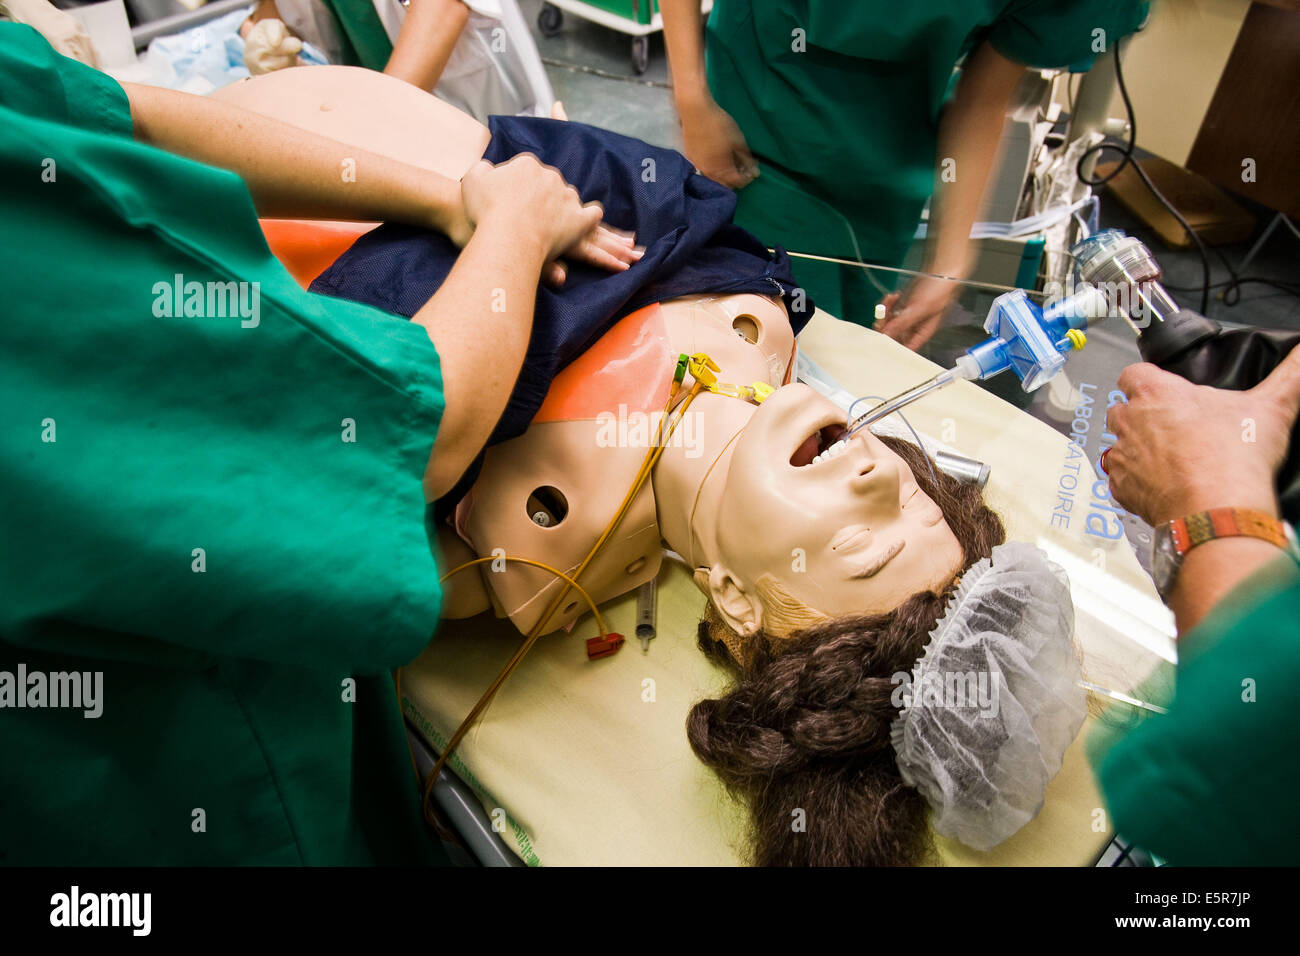 https://c8.alamy.com/comp/E5R7JP/medical-training-patient-simulator-pregnant-woman-emergency-cochin-E5R7JP.jpg